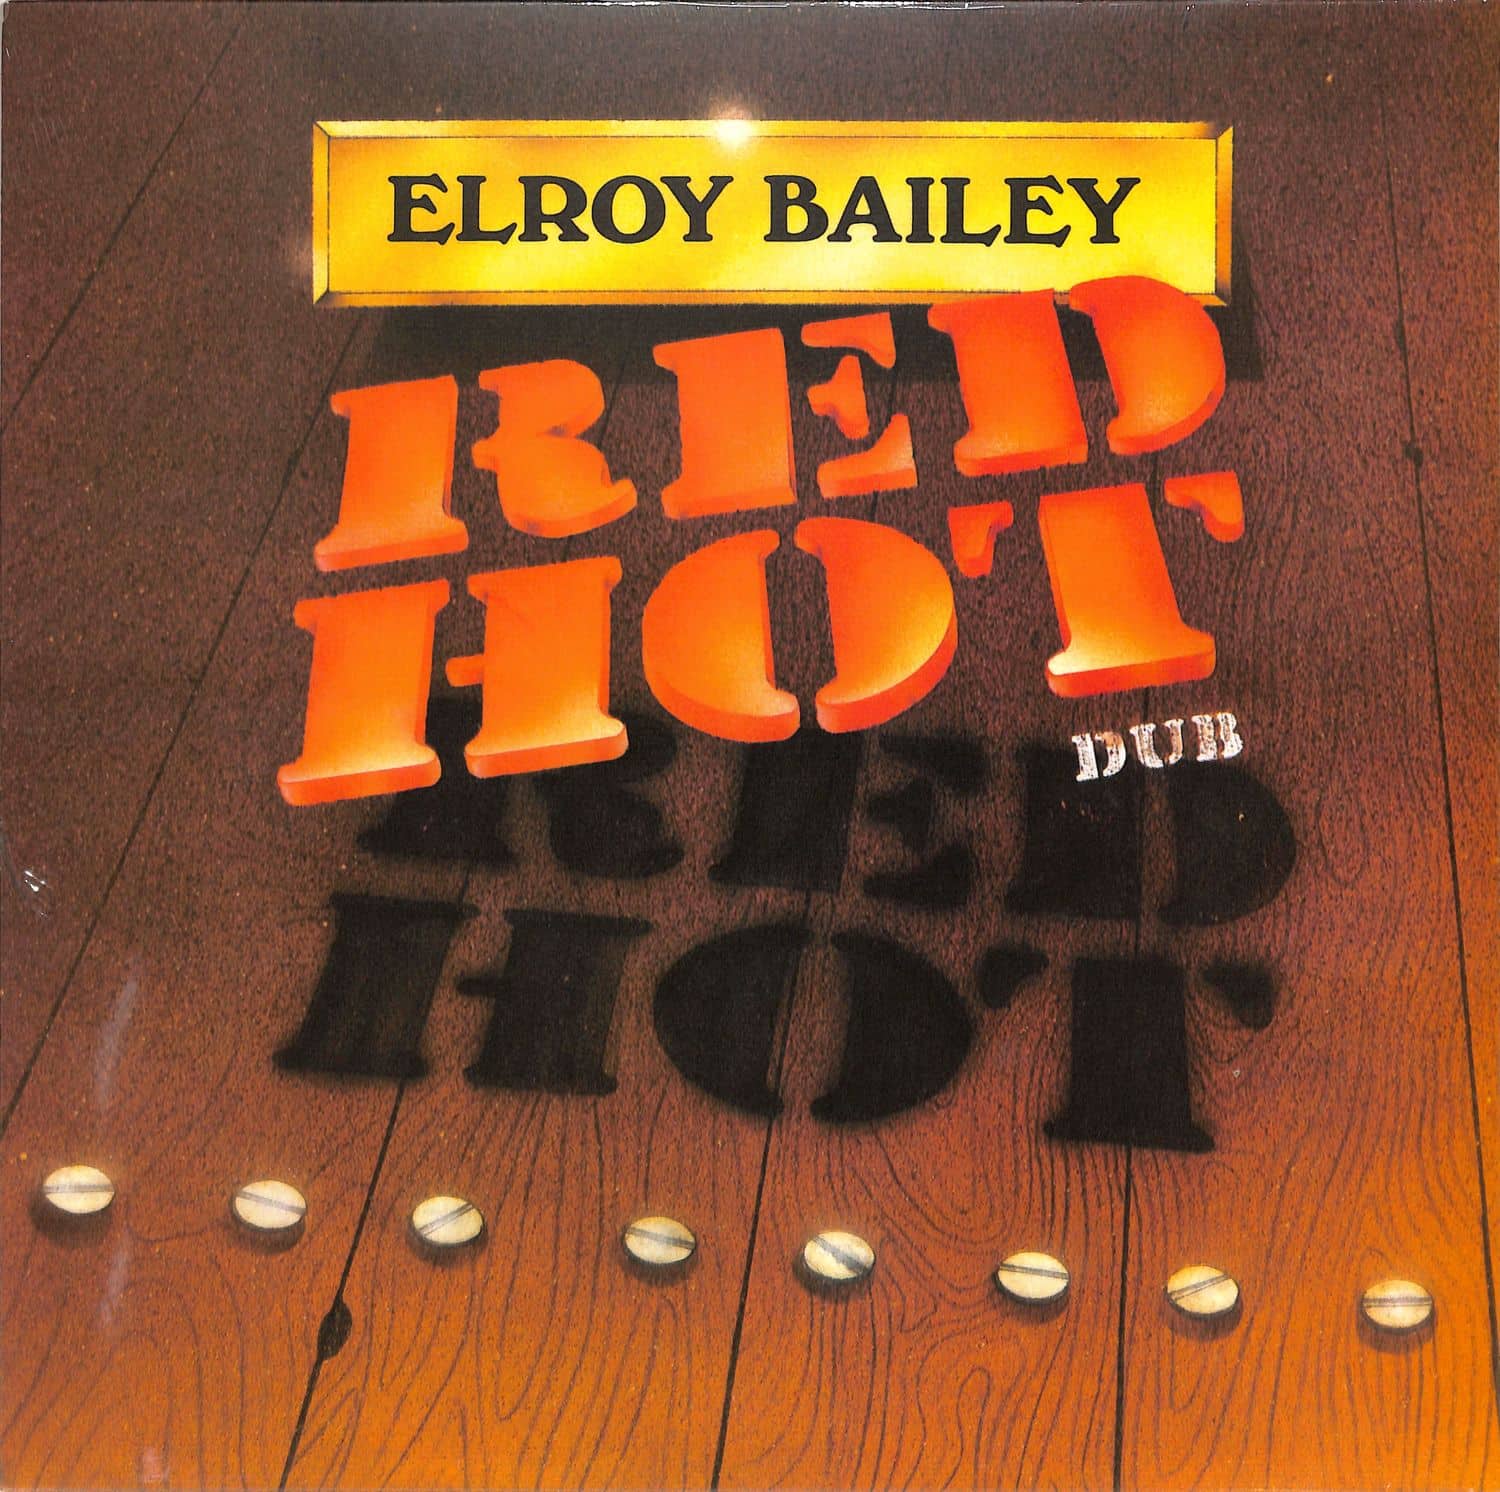 Elroy Bailey - RED HOT DUB 